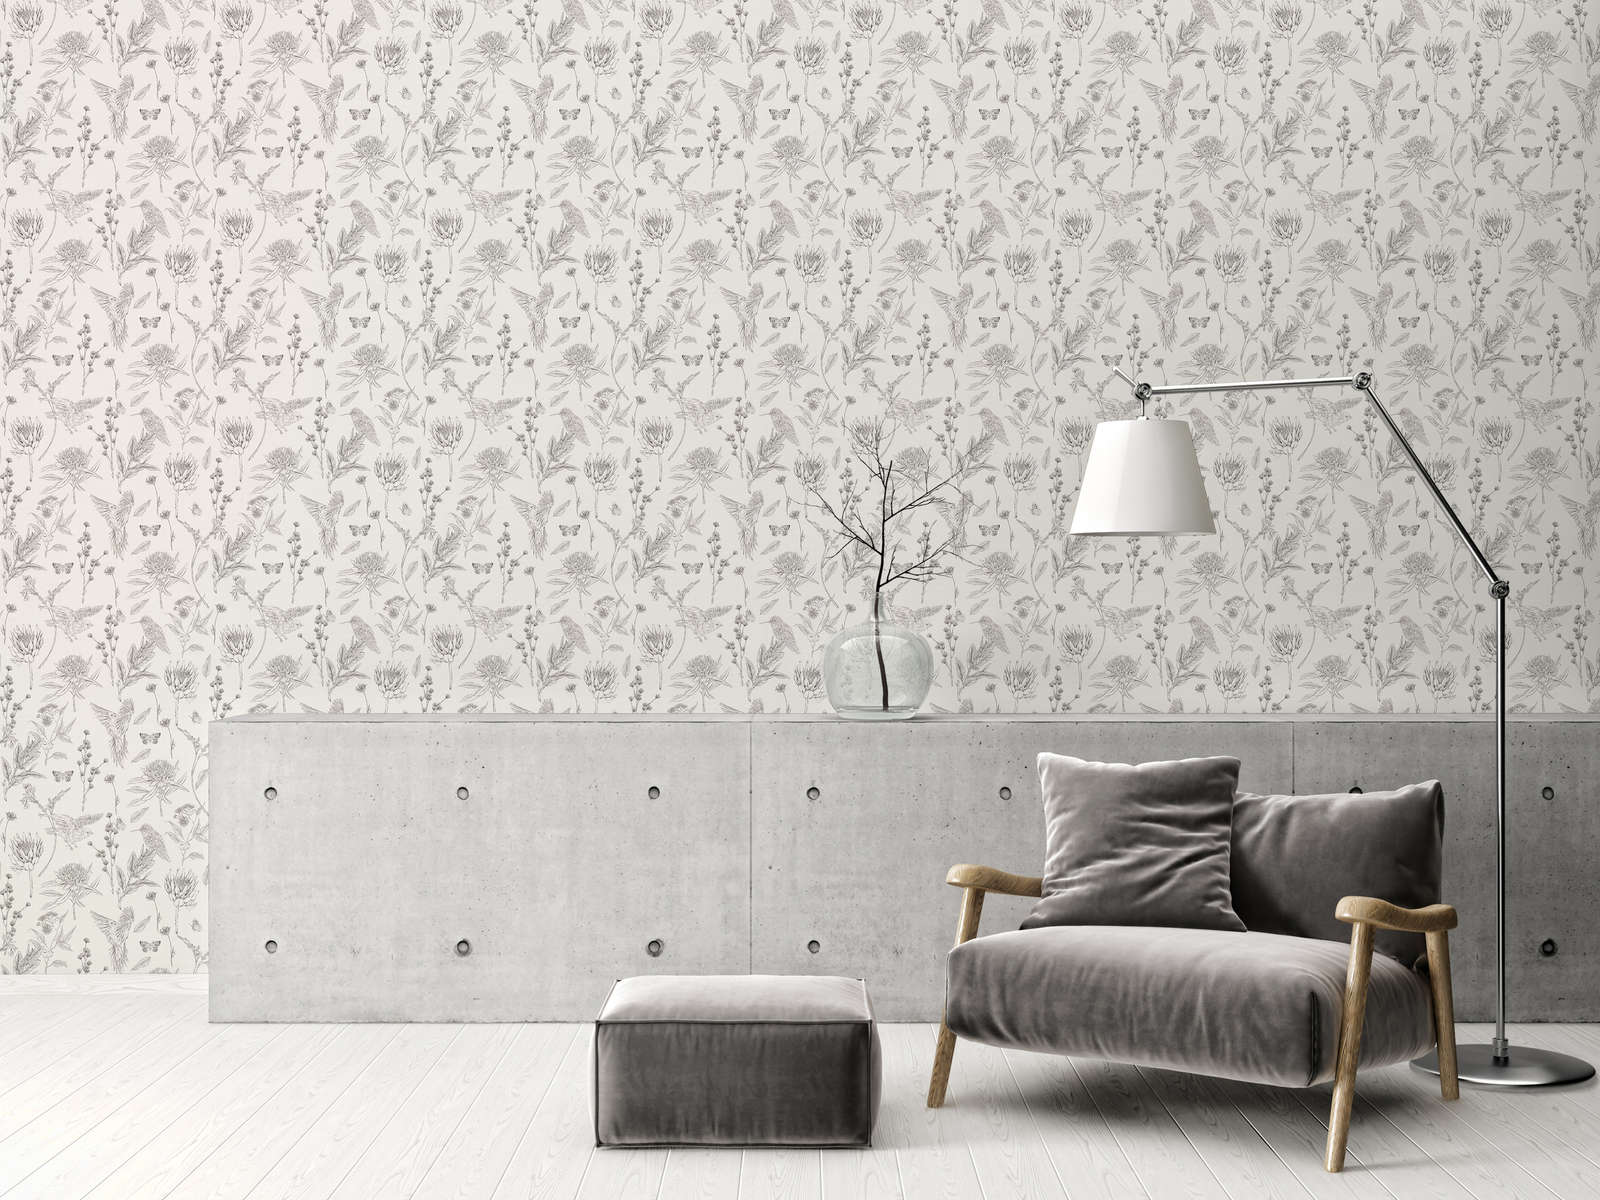             wallpaper floral with flowers & animals textured matt - white, black
        